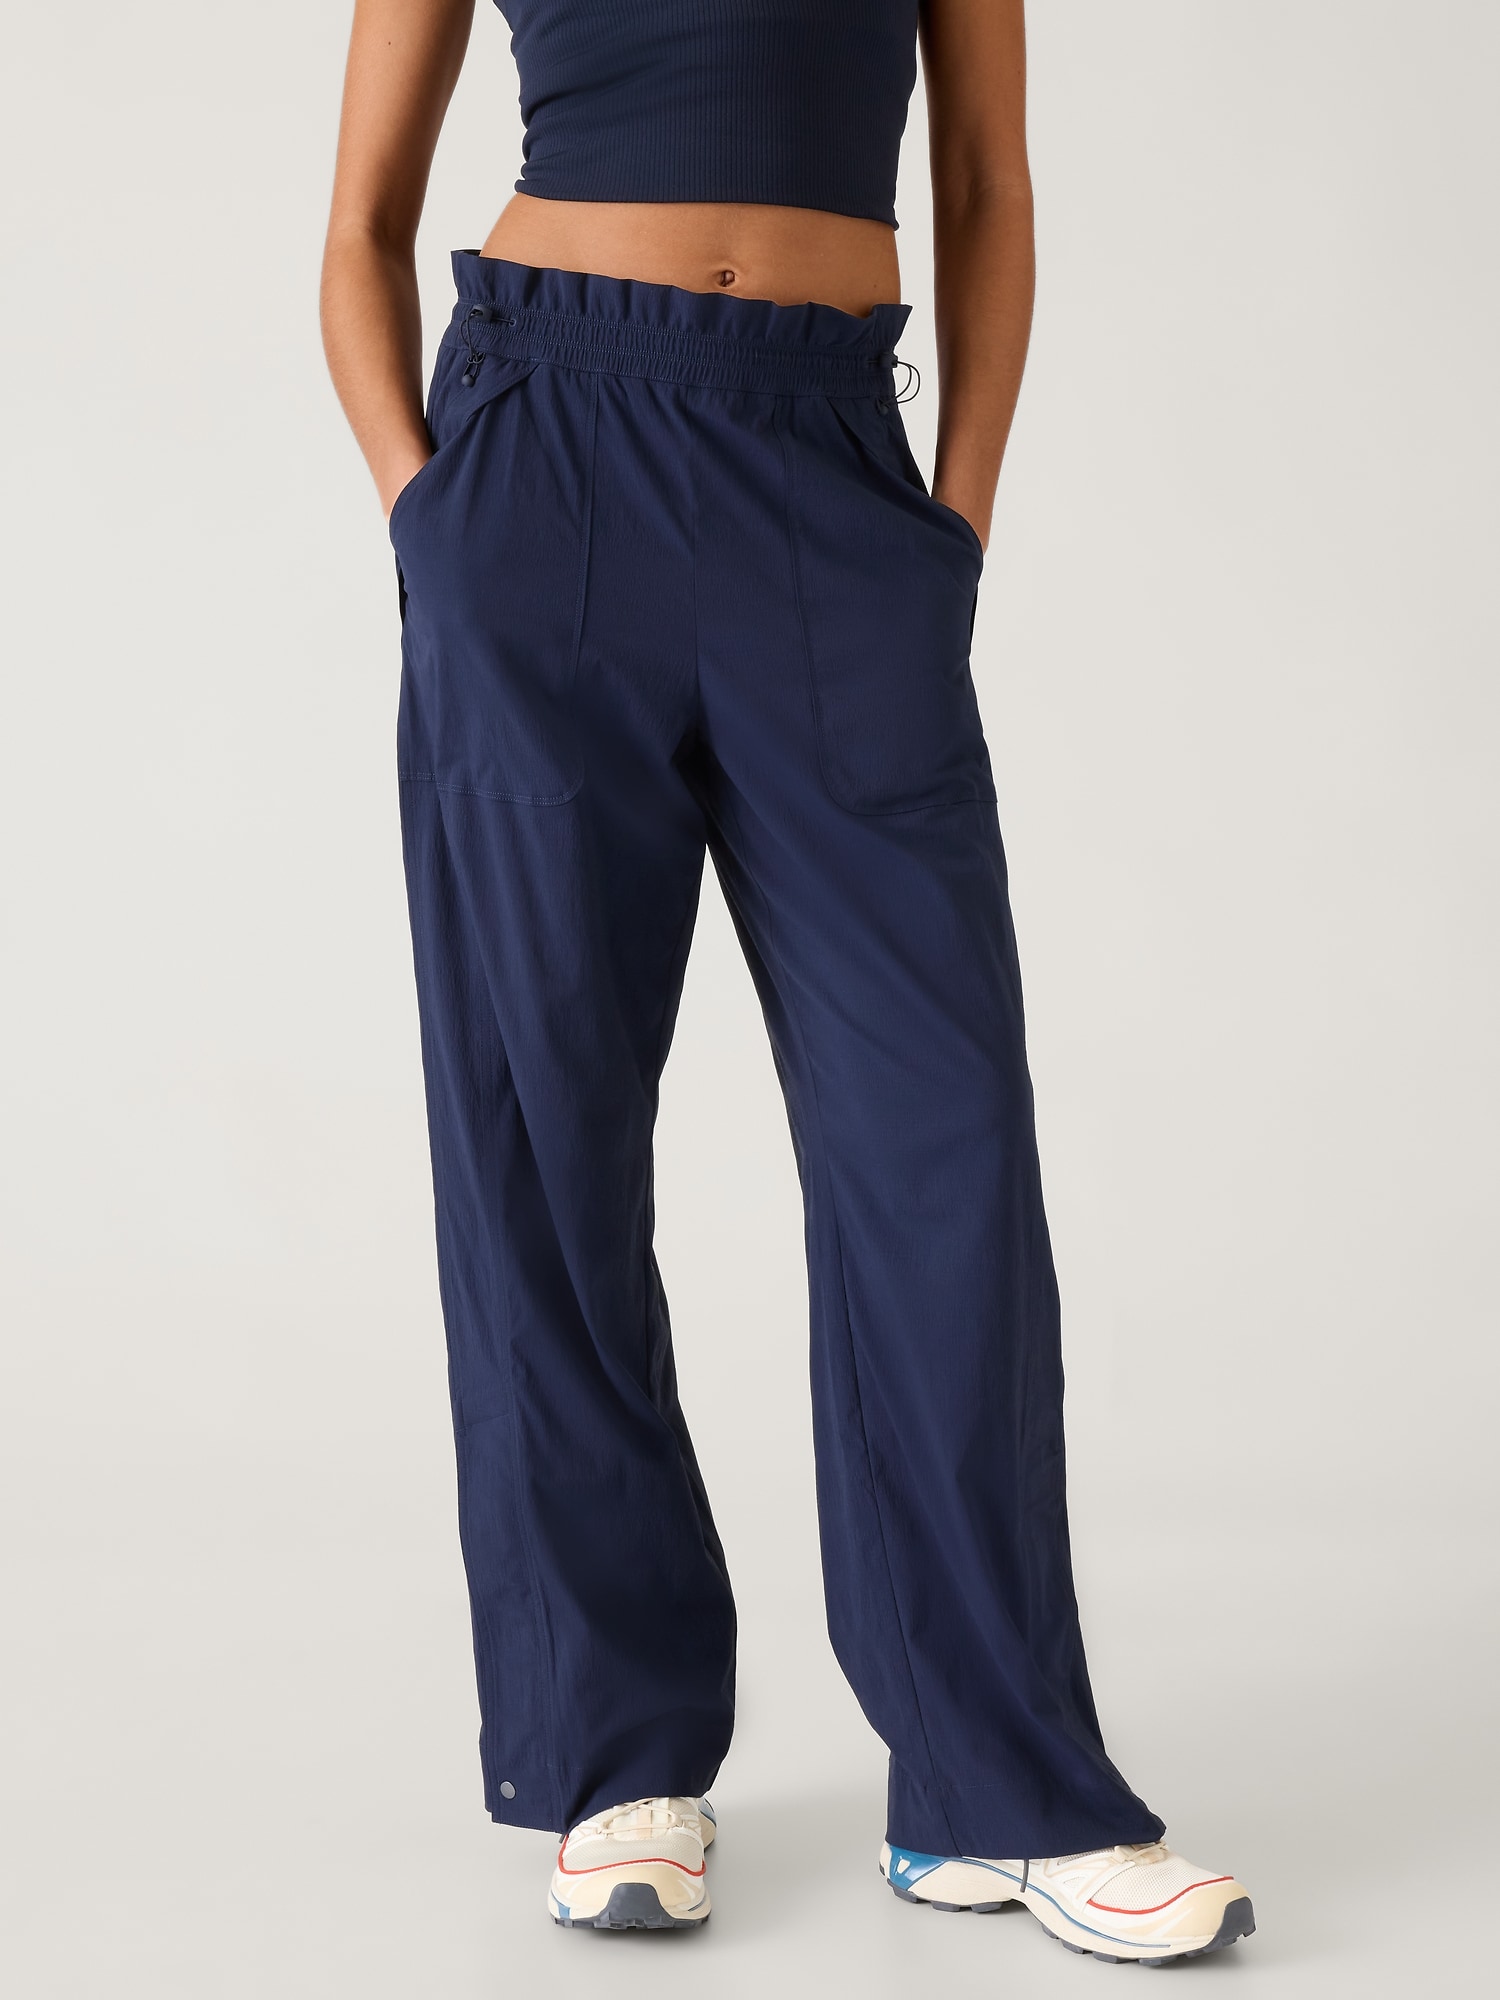 Athleta Dipper tan khaki Low Rise Cargo Utility hiking outdoors Pants size  10 - $28 - From tiffany